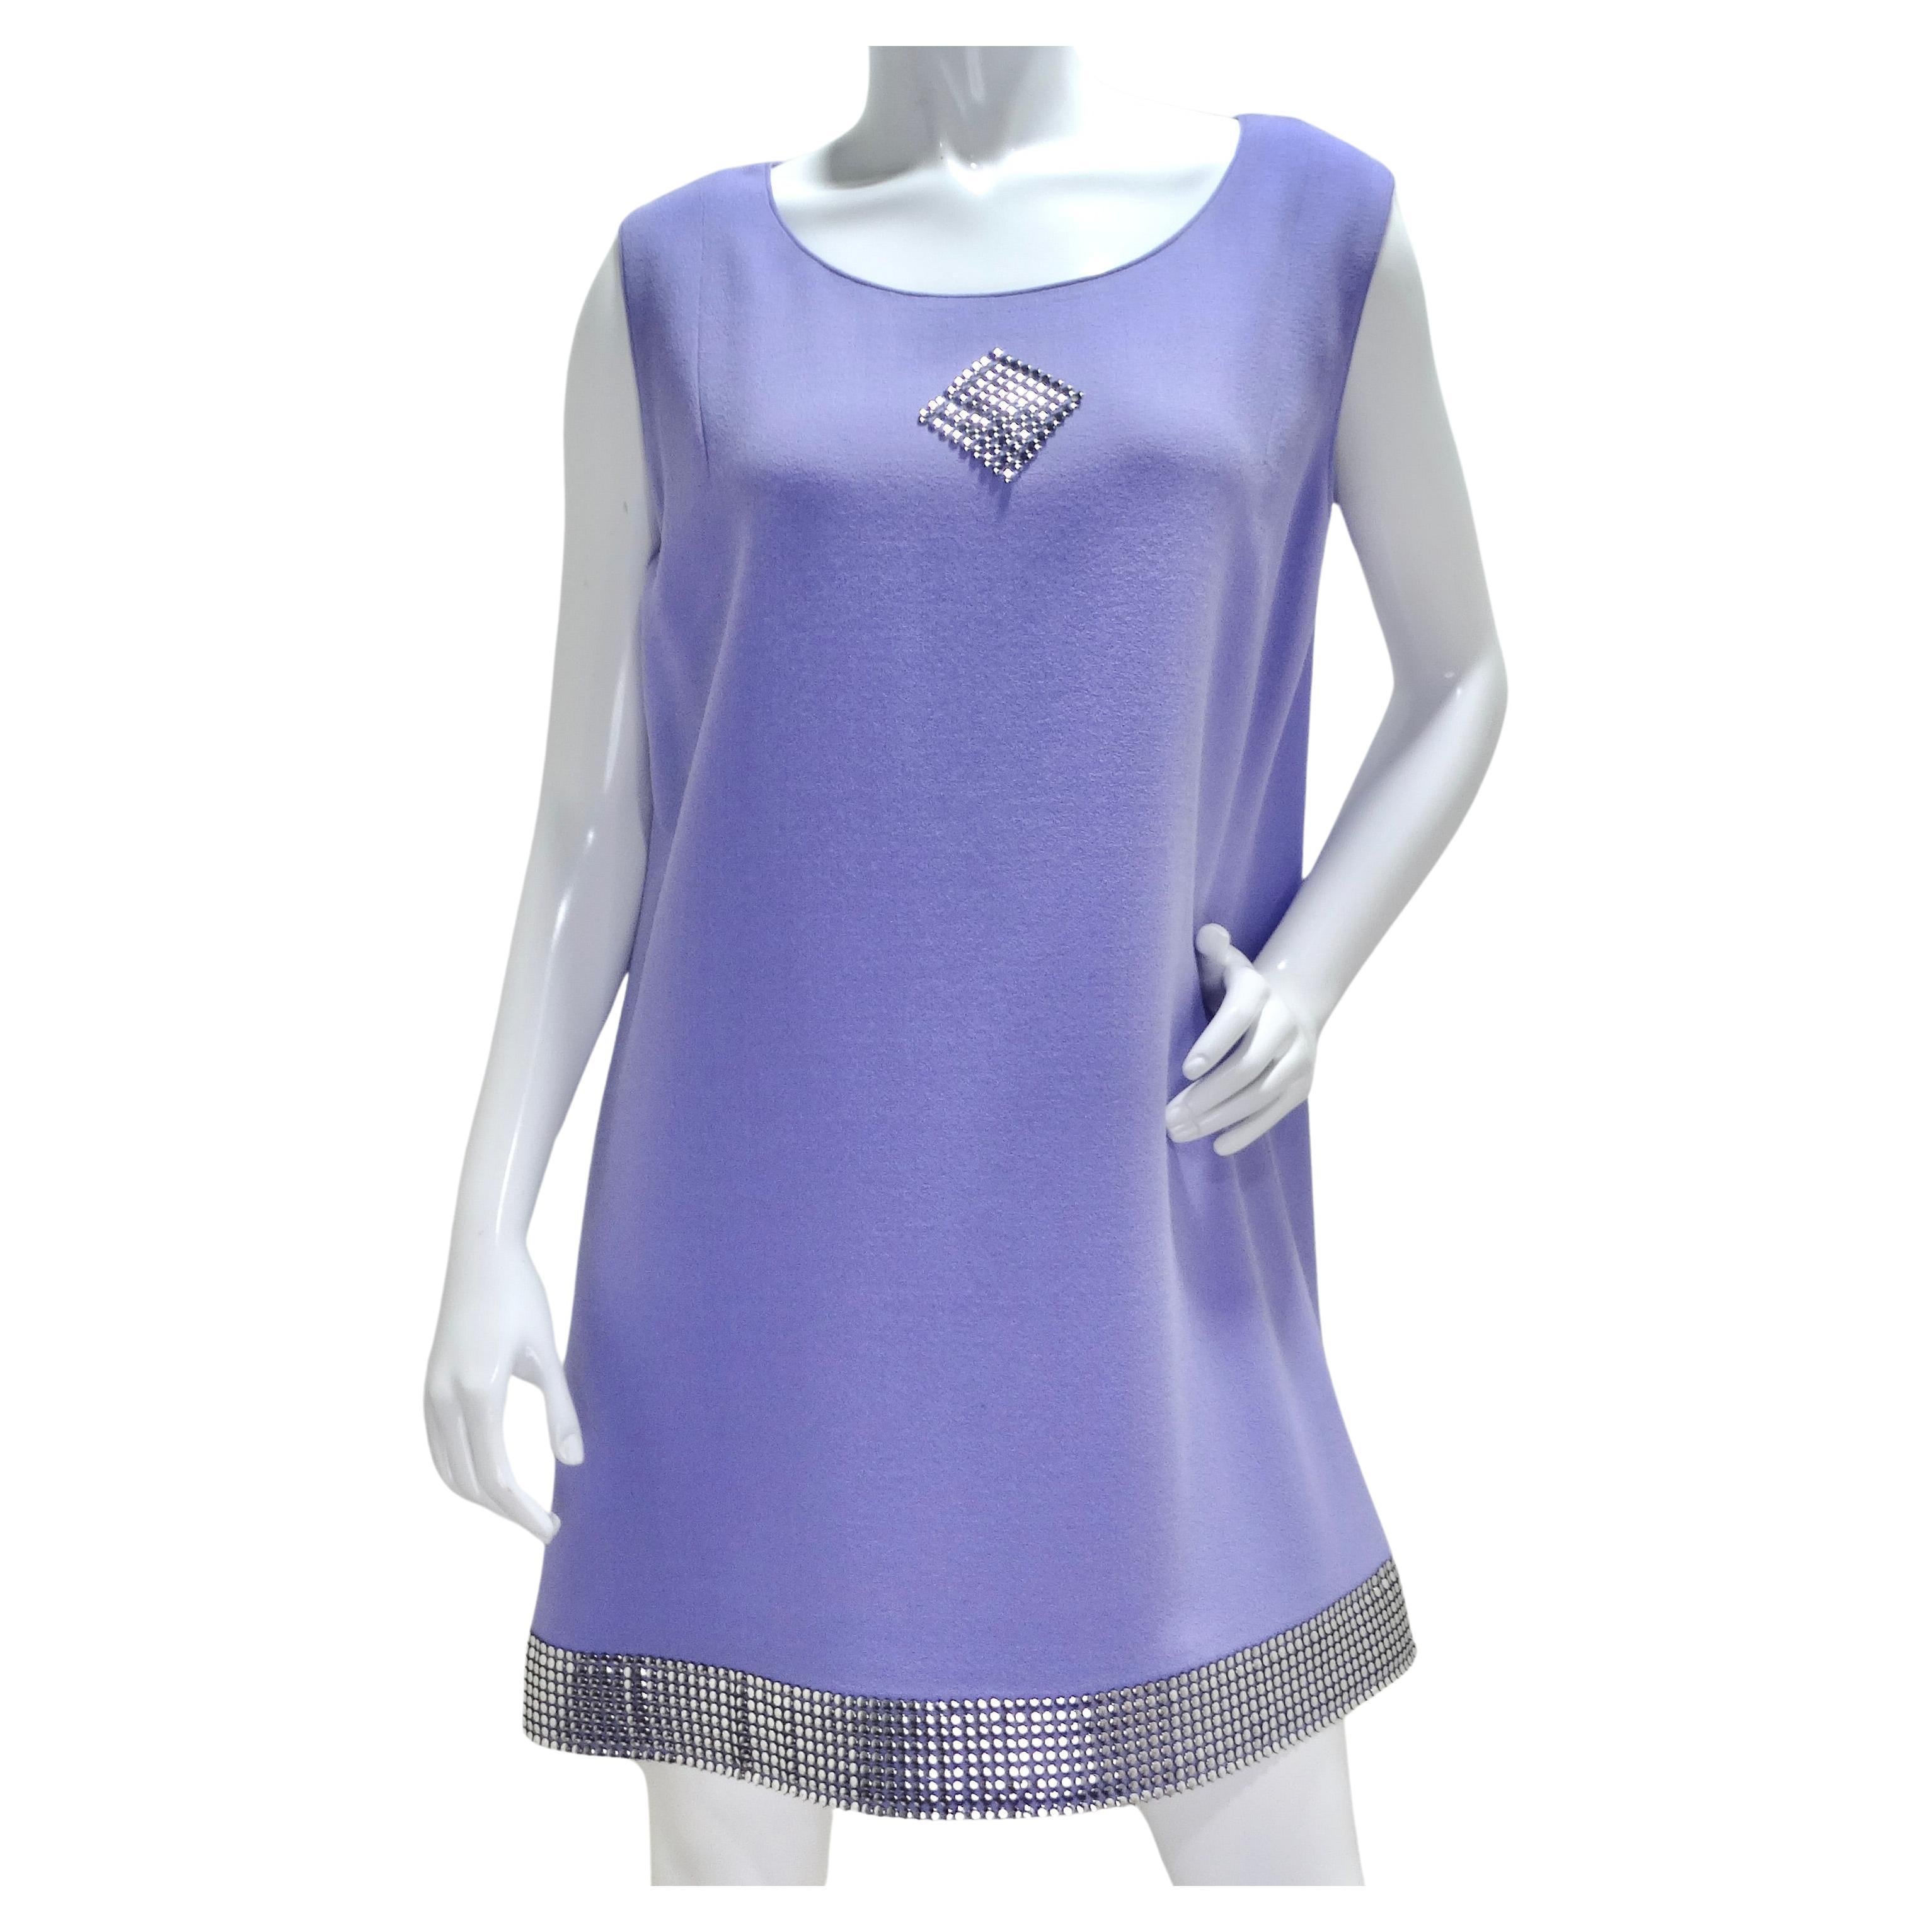 Pierre Cardin Lavender Studded Dress For Sale